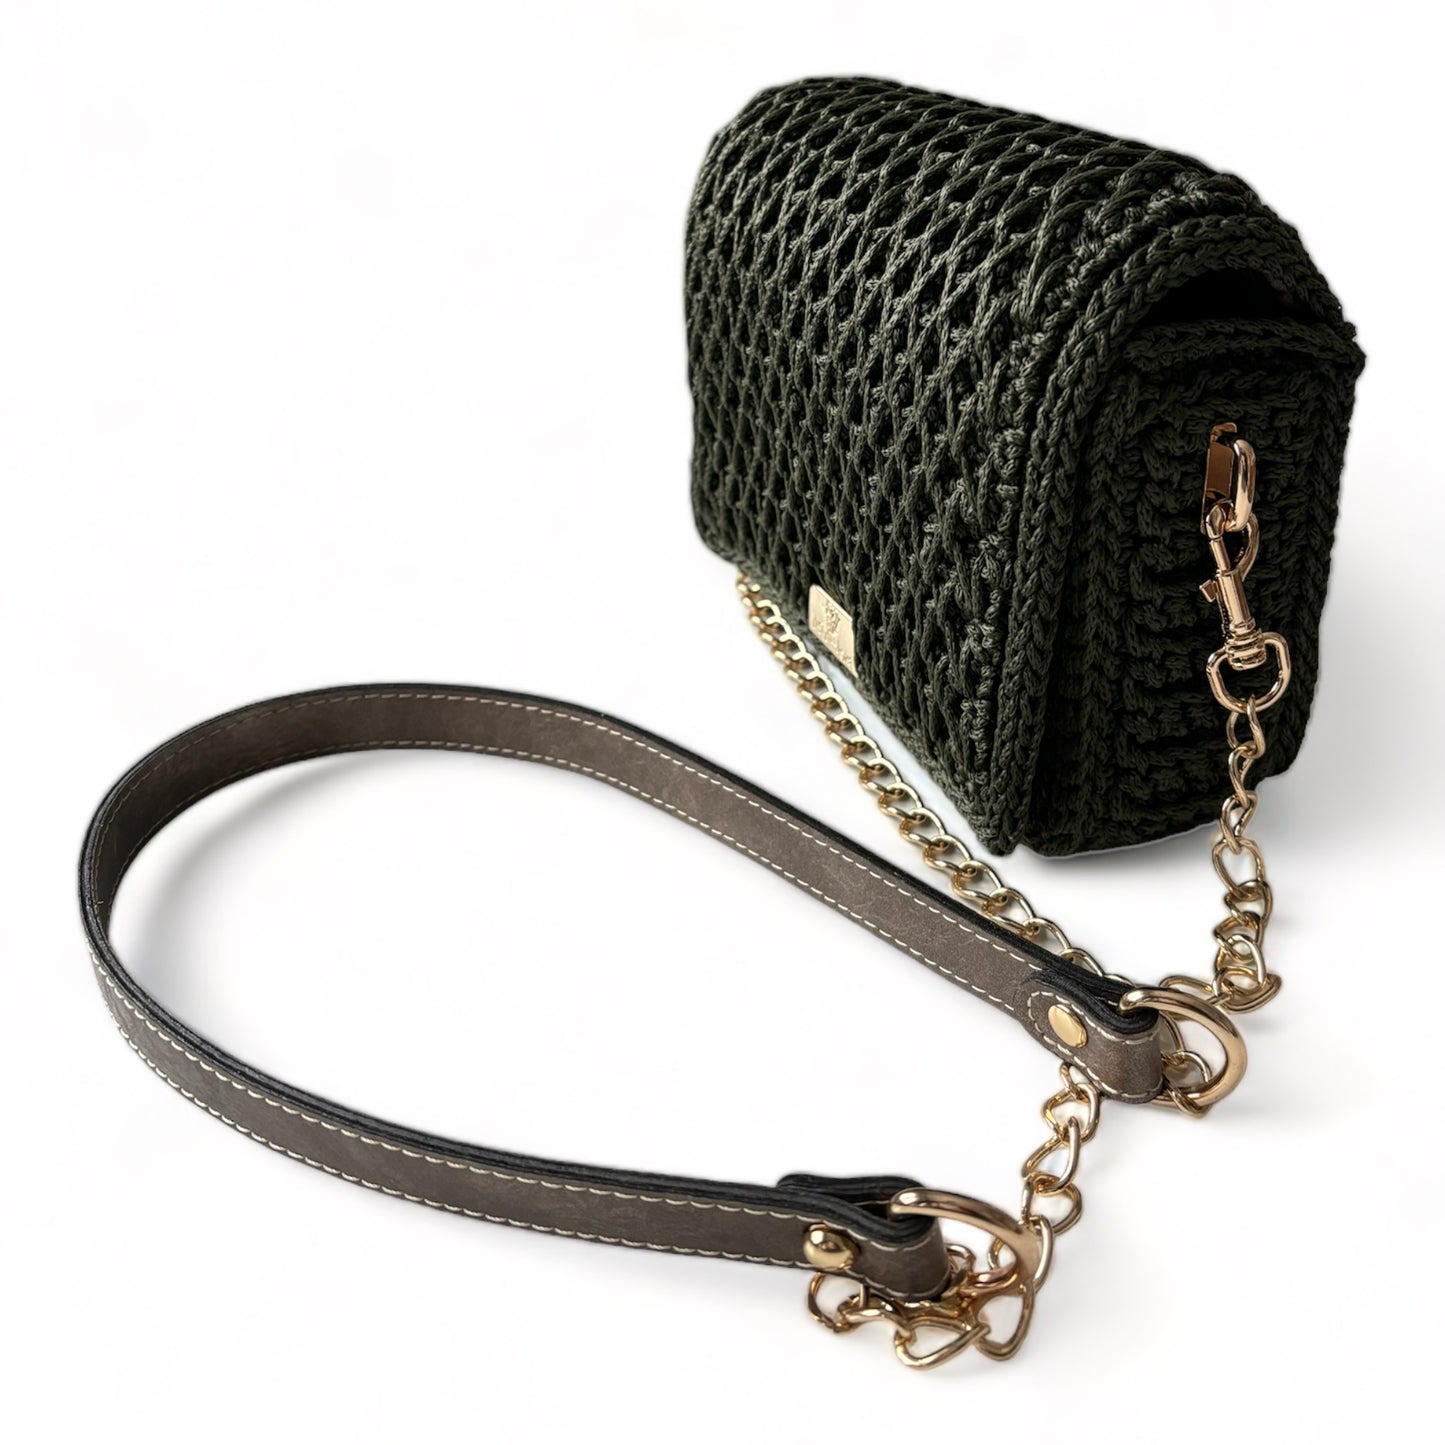 Dark green minimalist handbag with long strap